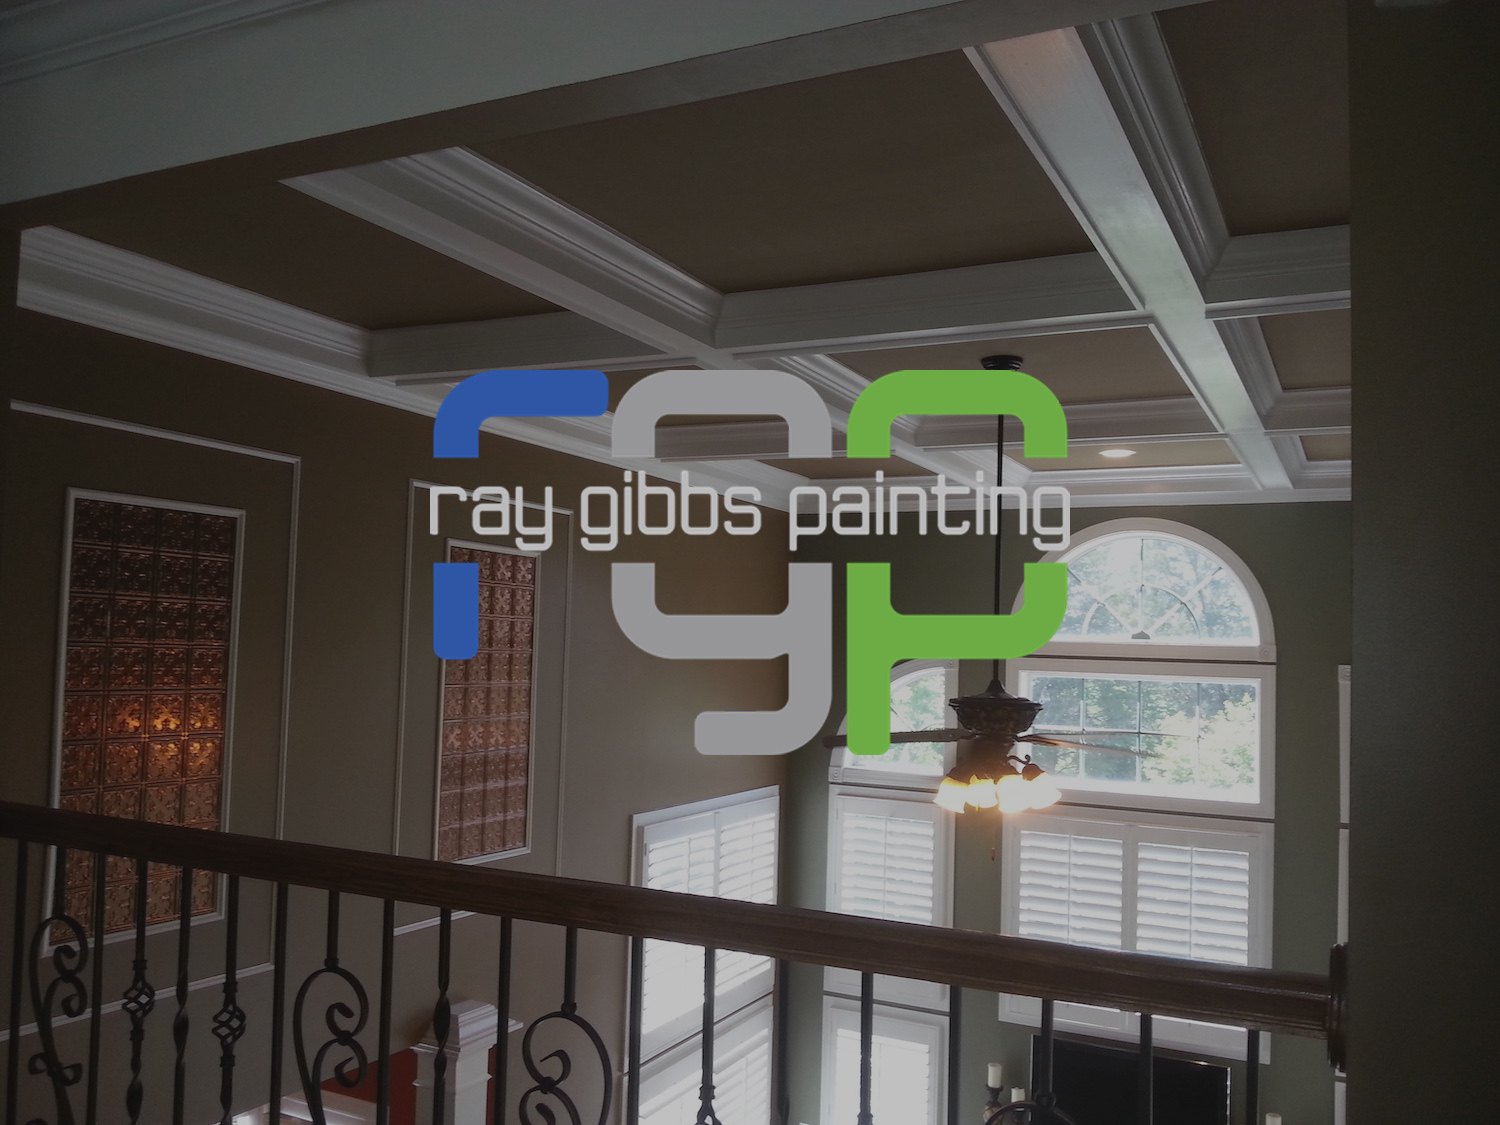 Gibbs Painting service